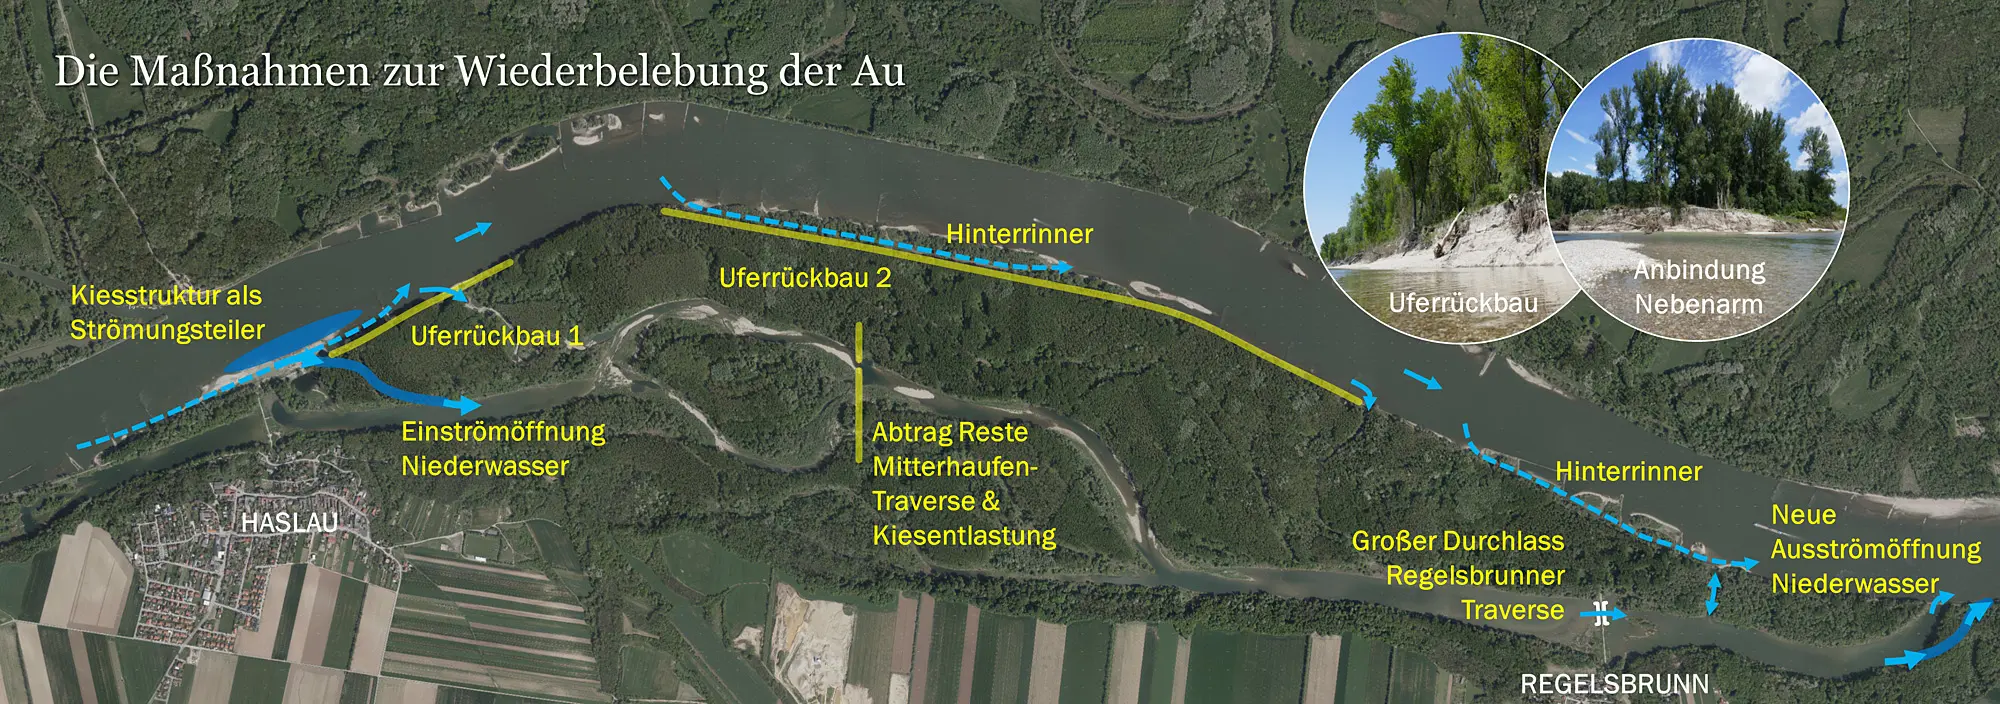 Maßnahmenkonzept Gewässervernetzung Haslau-Regelsbrunn, Quelle: viadonau